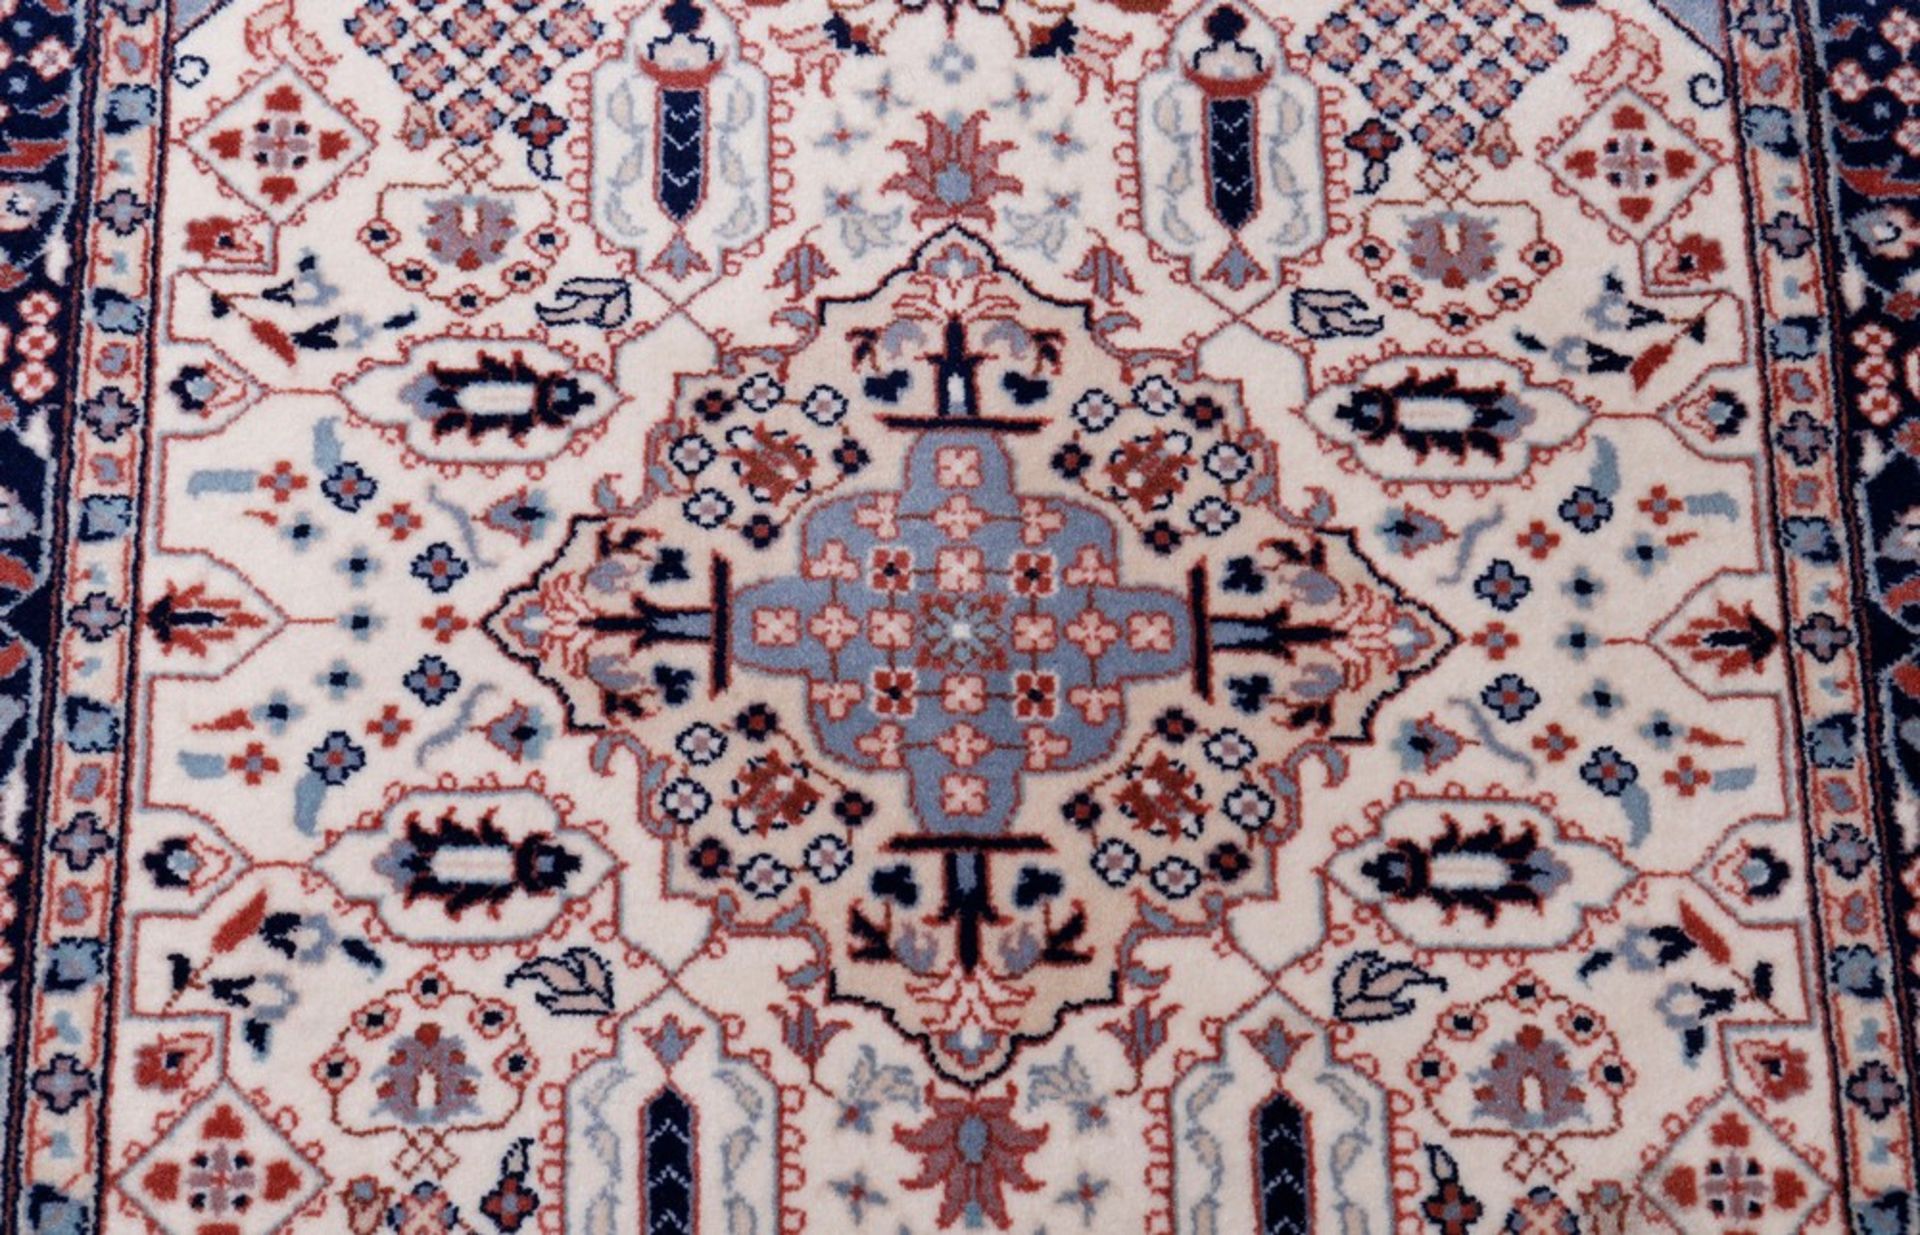 2 small carpets, Isfahan and Tabriz, Persia - Image 2 of 3